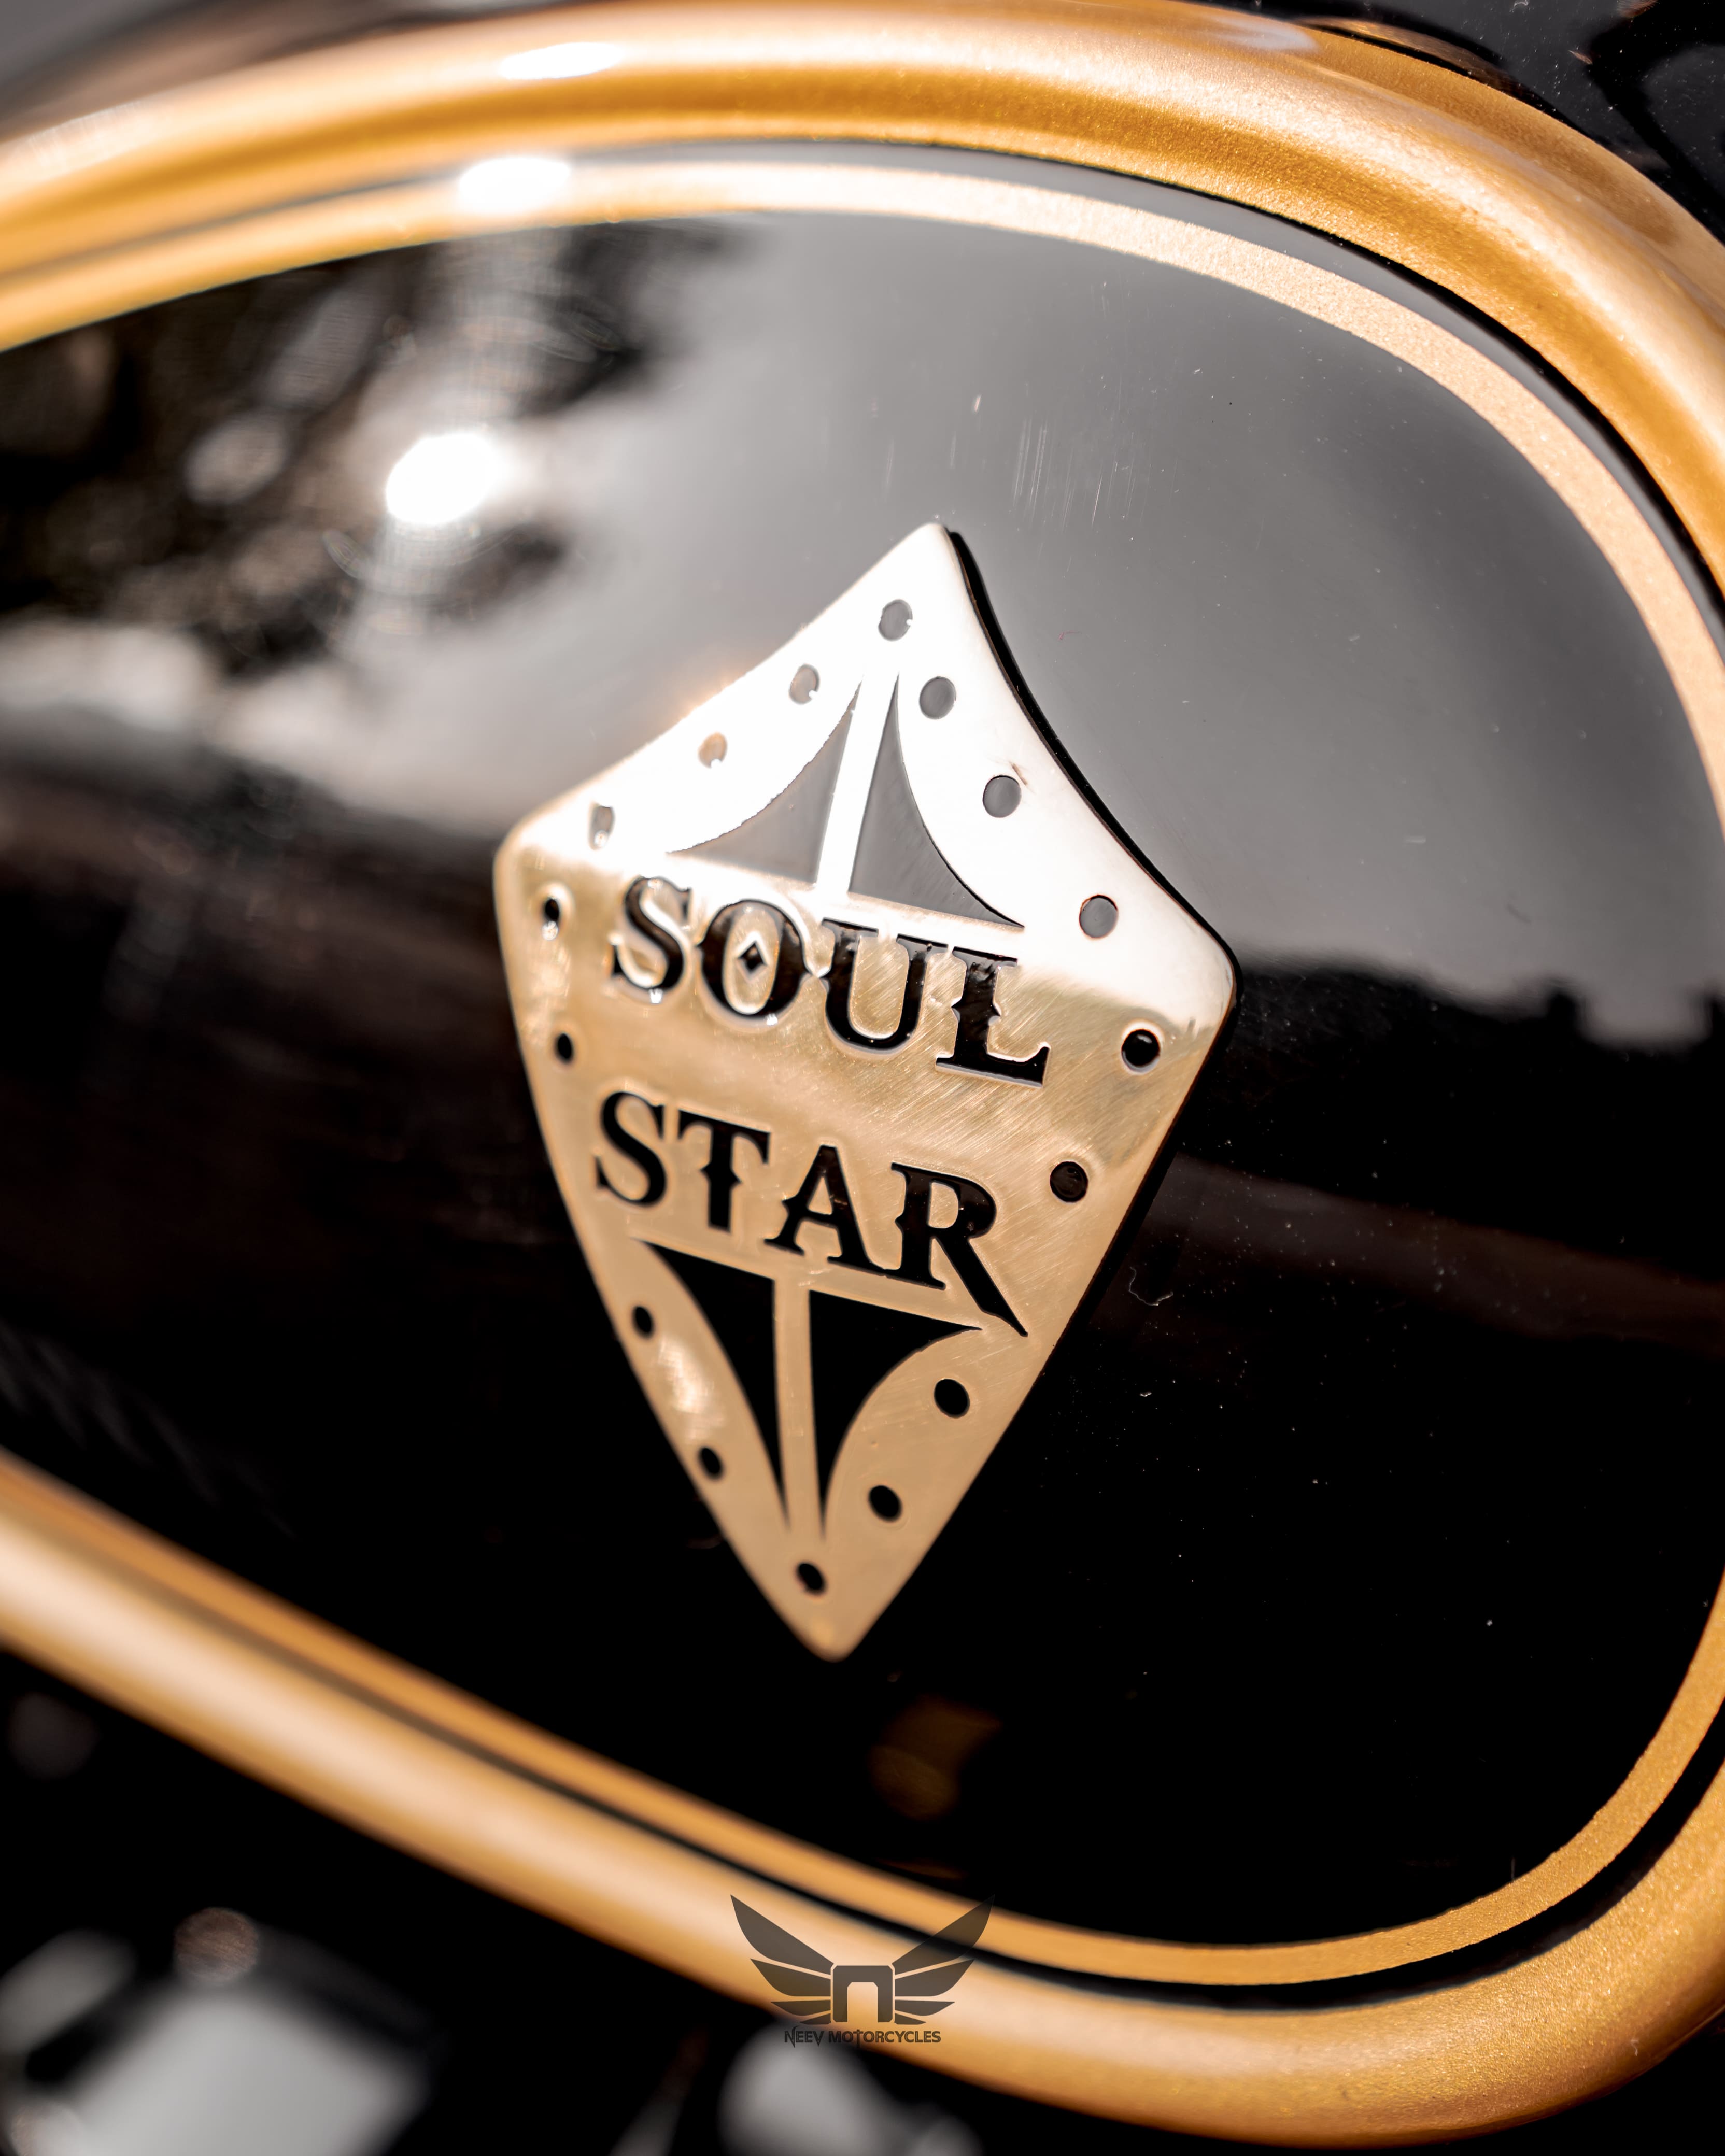 Meet Neev Royal Enfield Soul Star 650 - Live Photos and Details - closeup